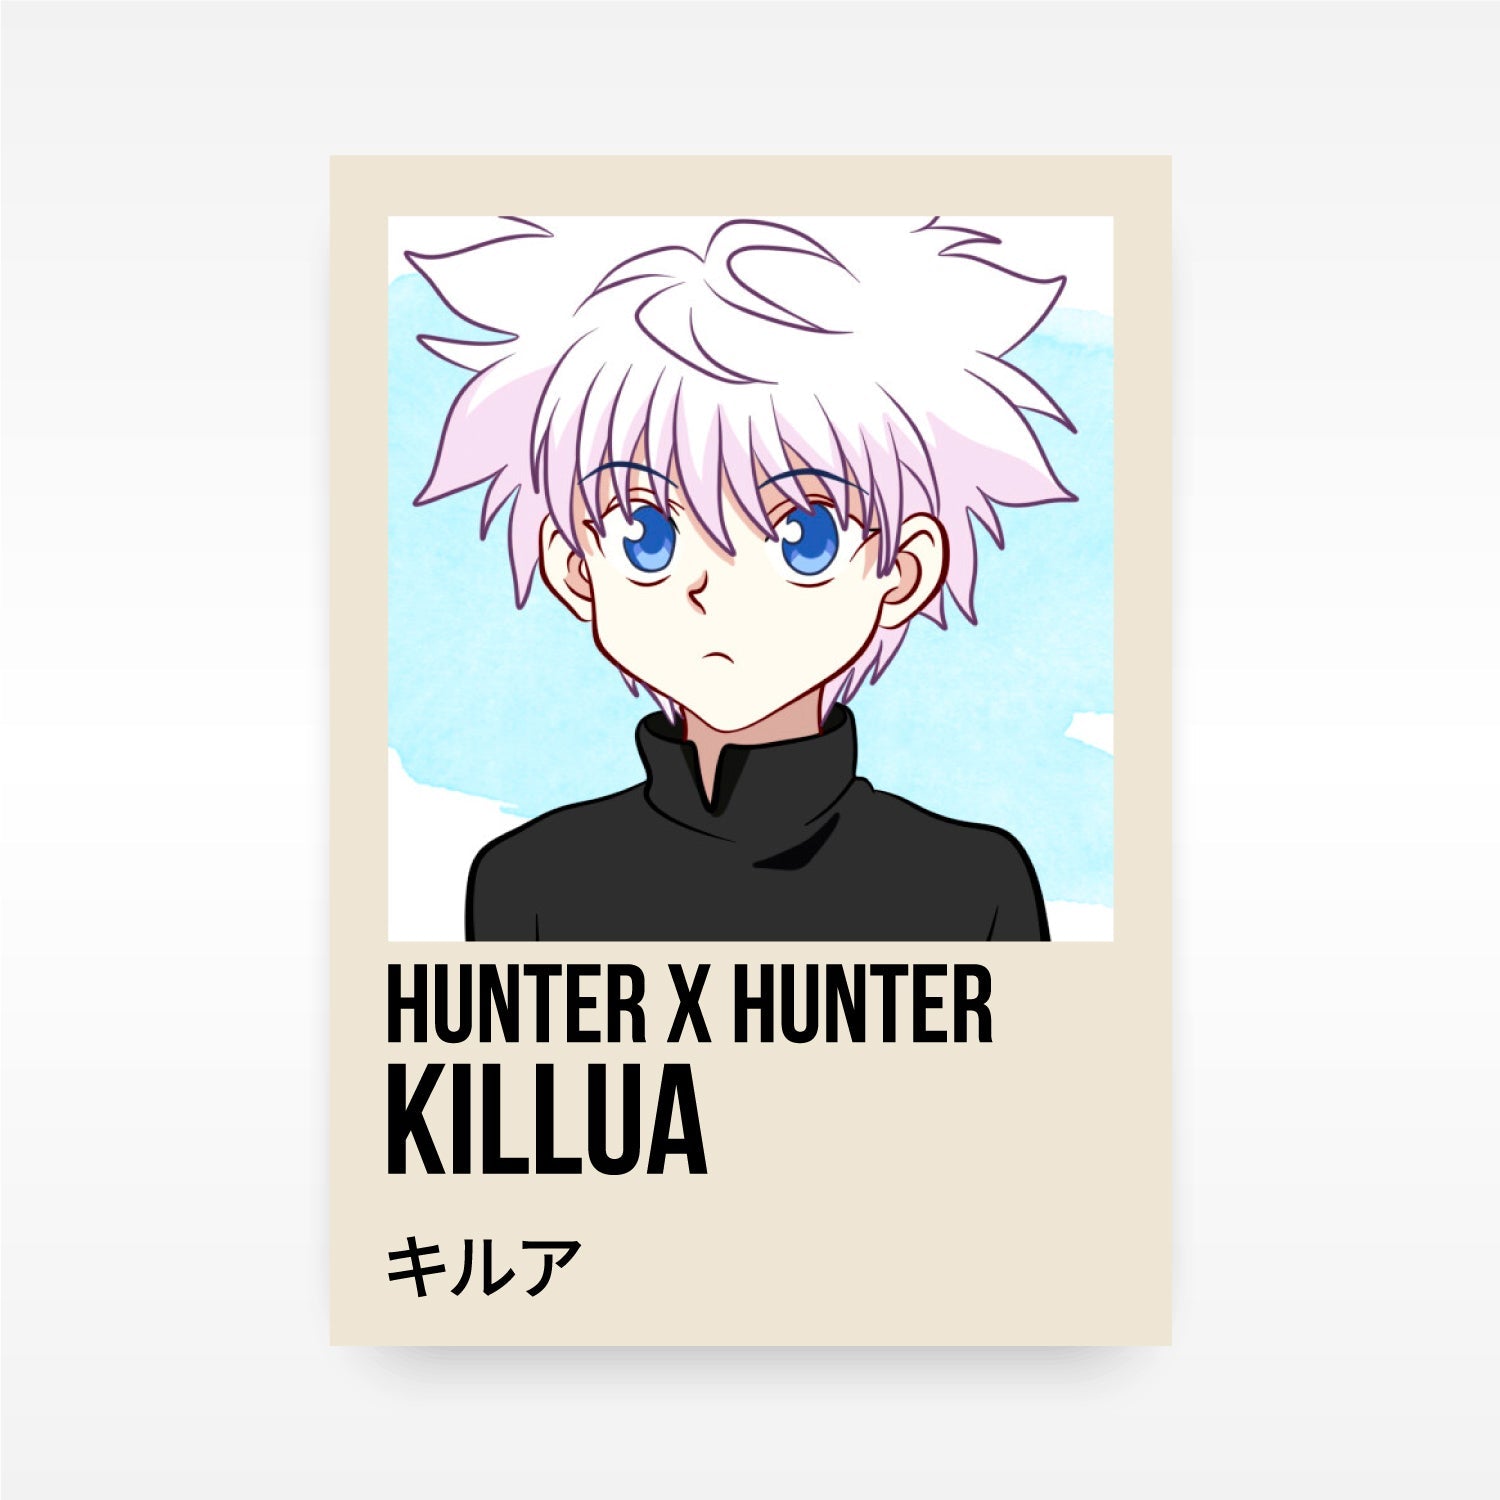 Killua  Hunter x hunter, Hunter anime, Hunter